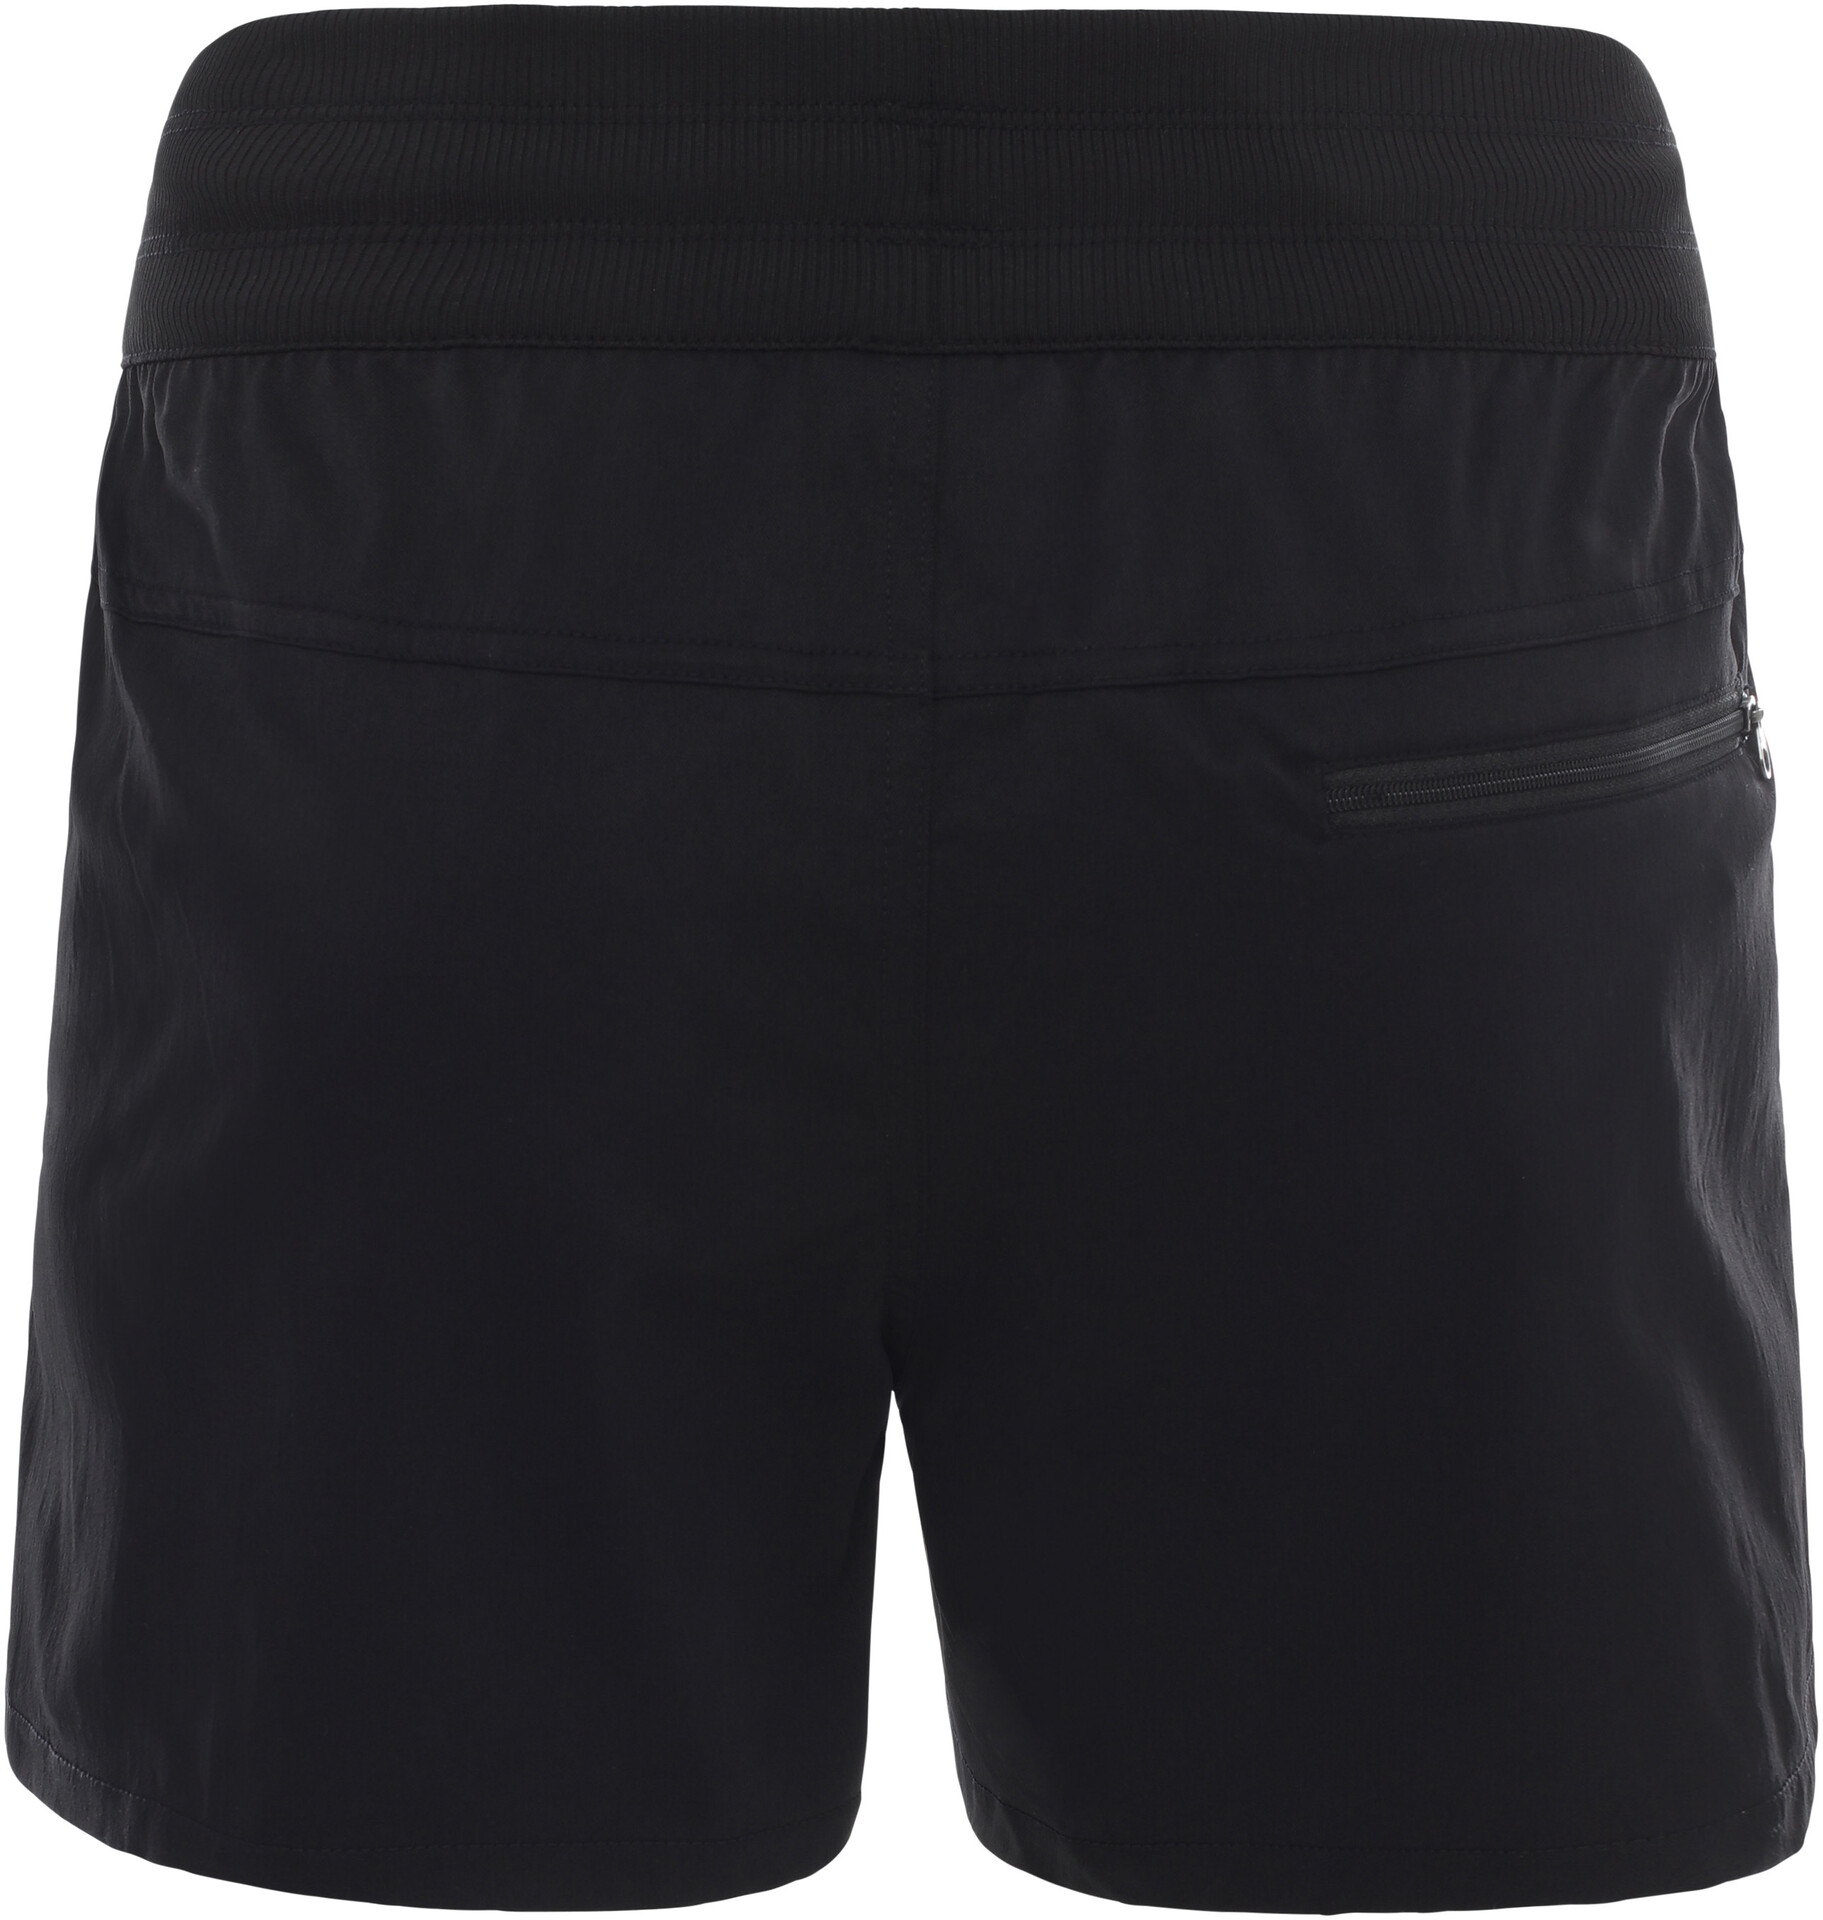 north face aphrodite shorts